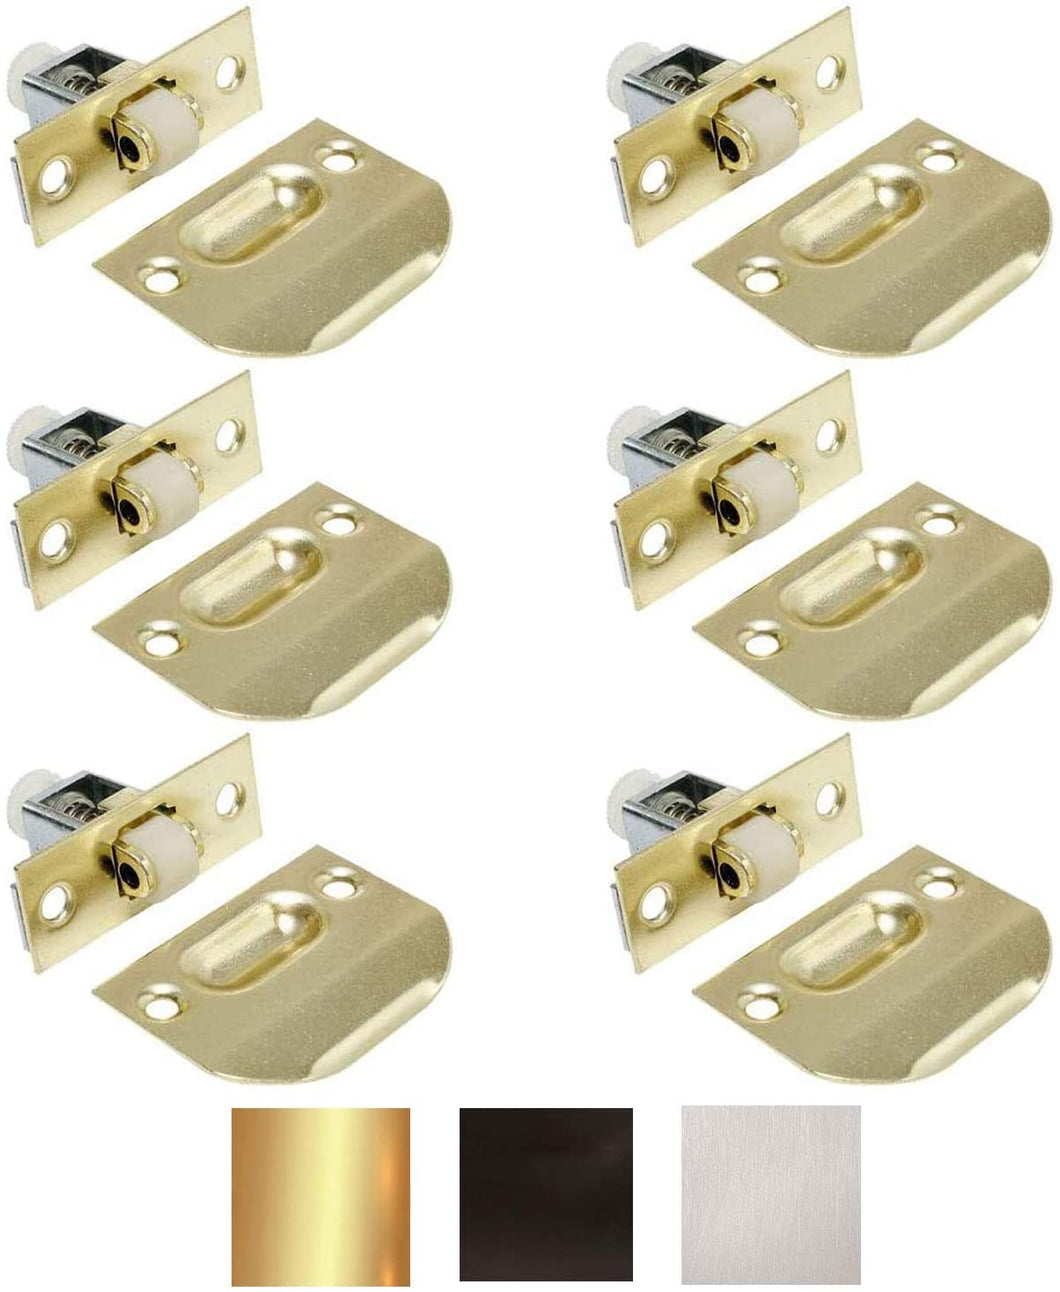 Litepak Adjustable Roller Catch - 6 Pack, Brass Plated